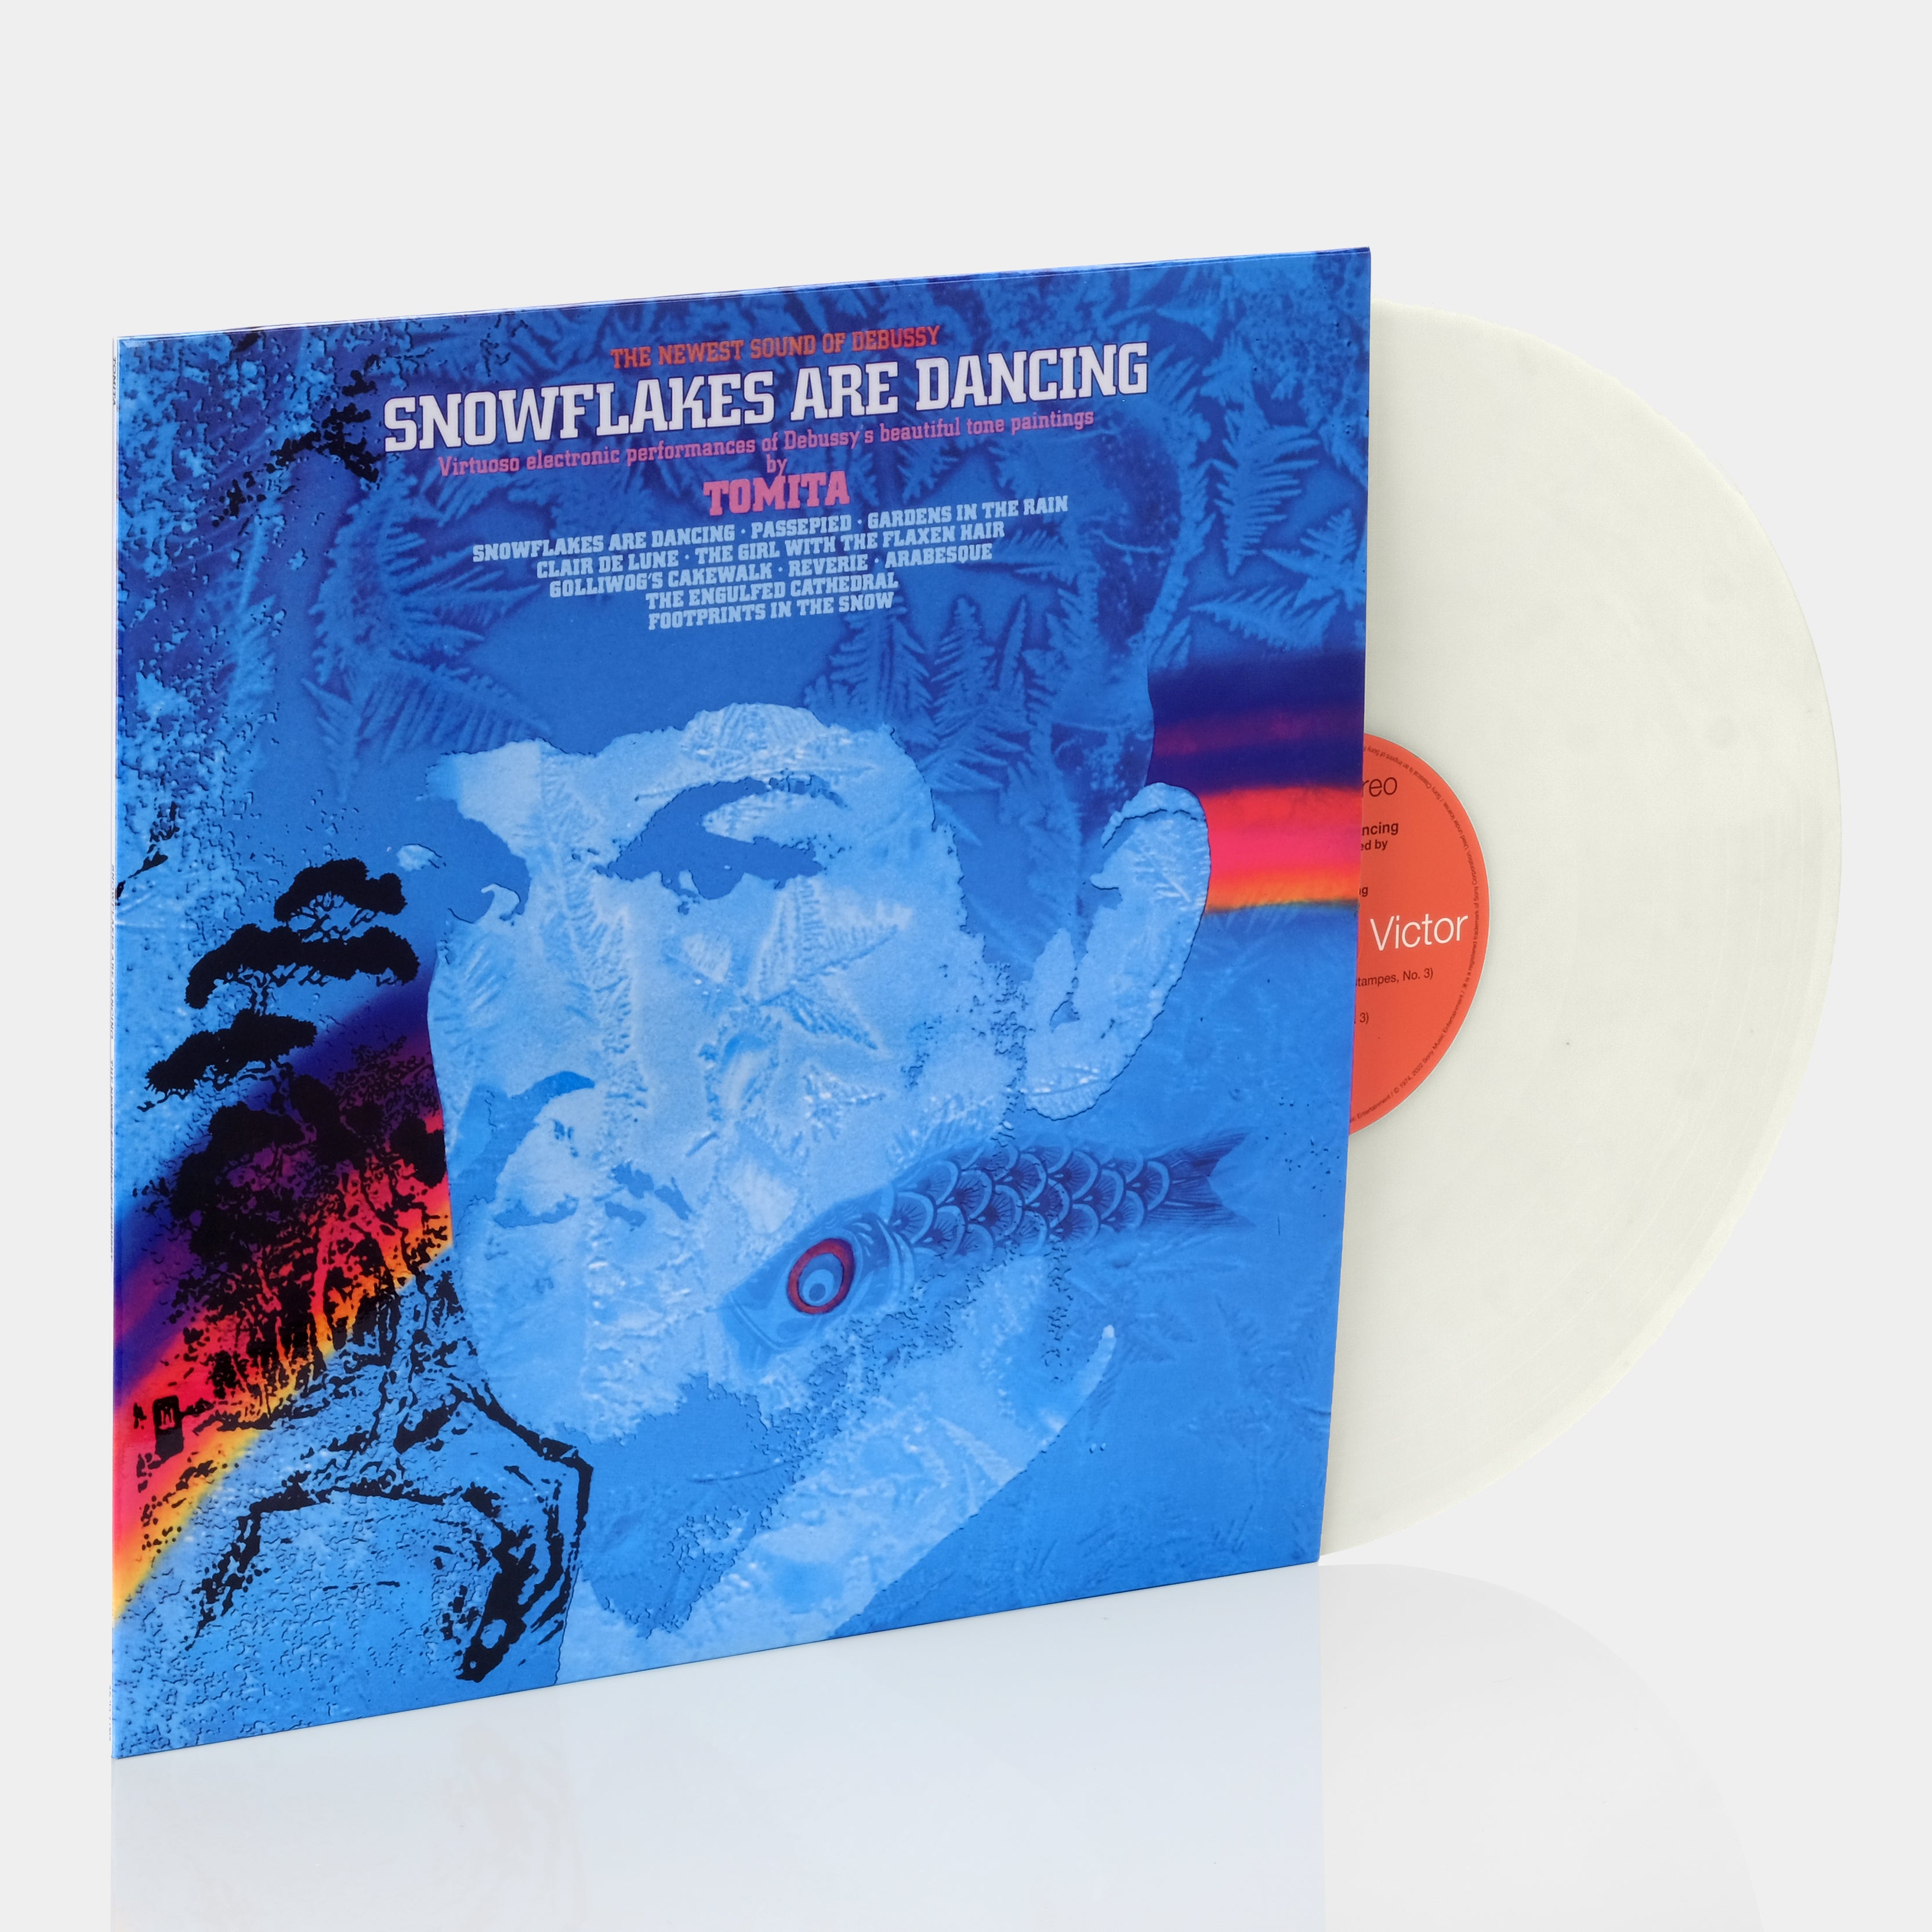 Tomita - Snowflakes Are Dancing LP Snow-White Vinyl Record